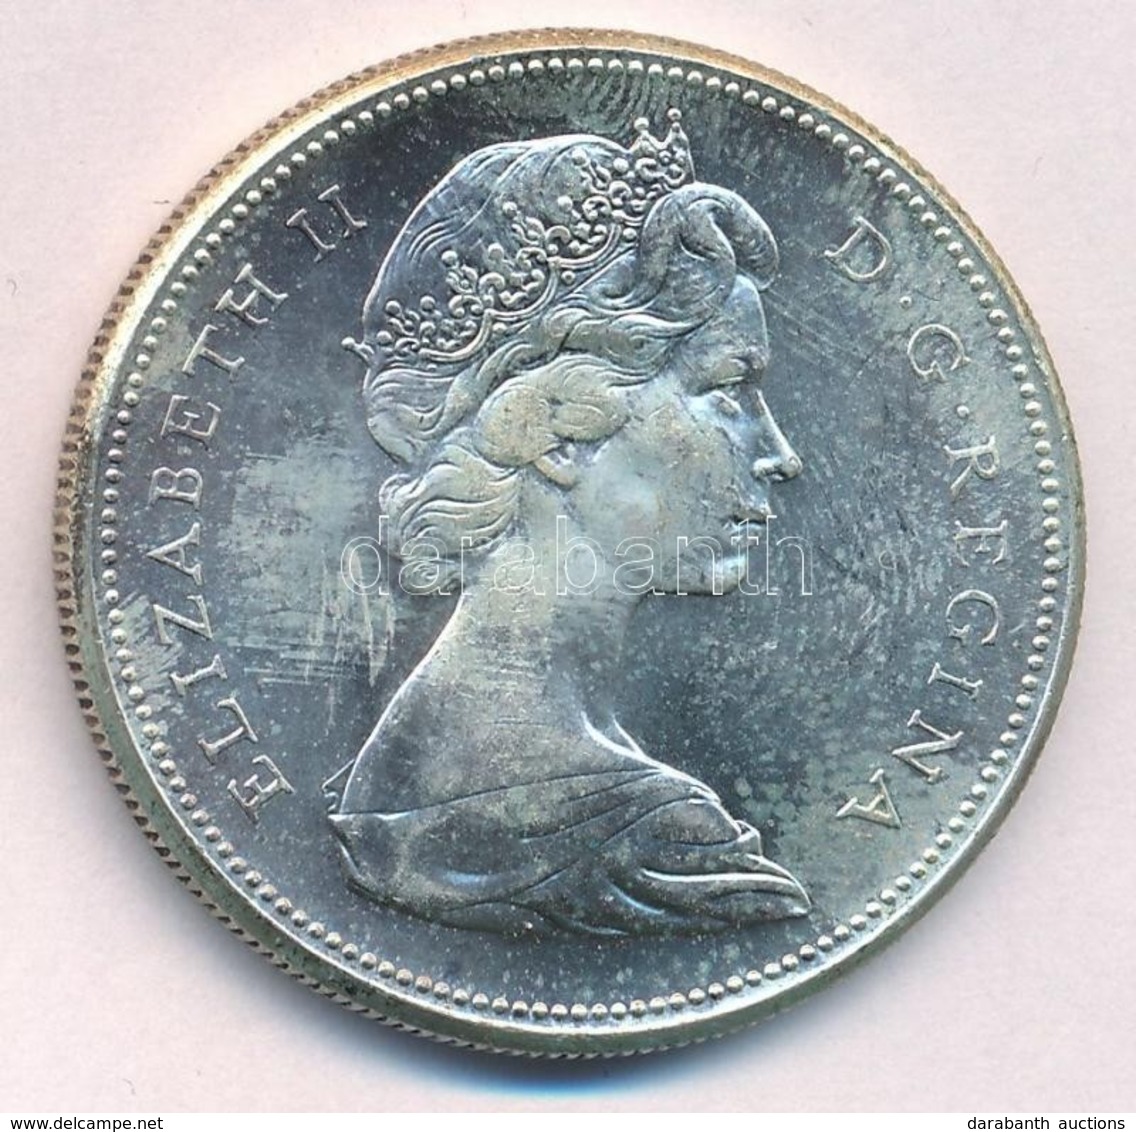 Kanada 1967. 1$ Ag 'II. Erzsébet' T:2
Canada 1967. 1 Dollar Ag 'Elizabeth II' C:XF
Krause KM#70 - Sin Clasificación